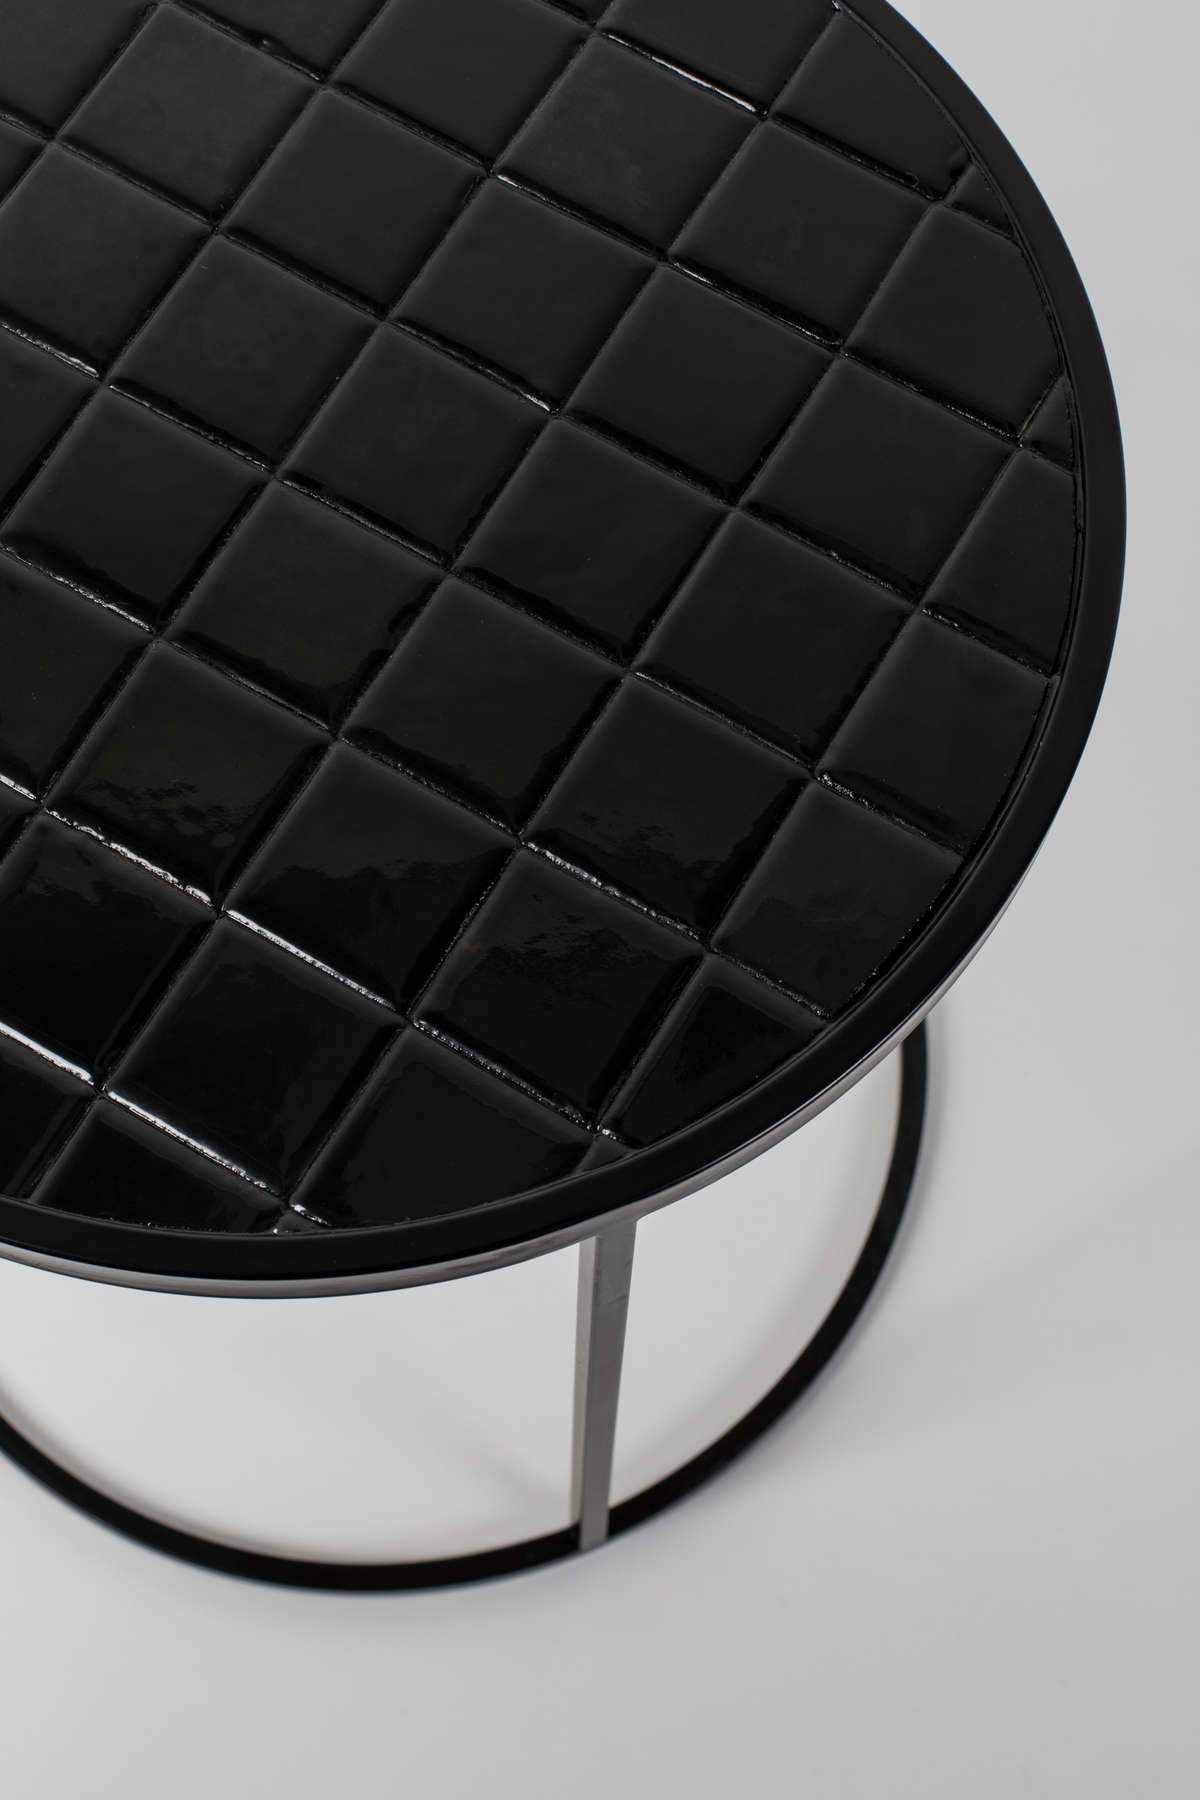 GLAZED table black, Zuiver, Eye on Design